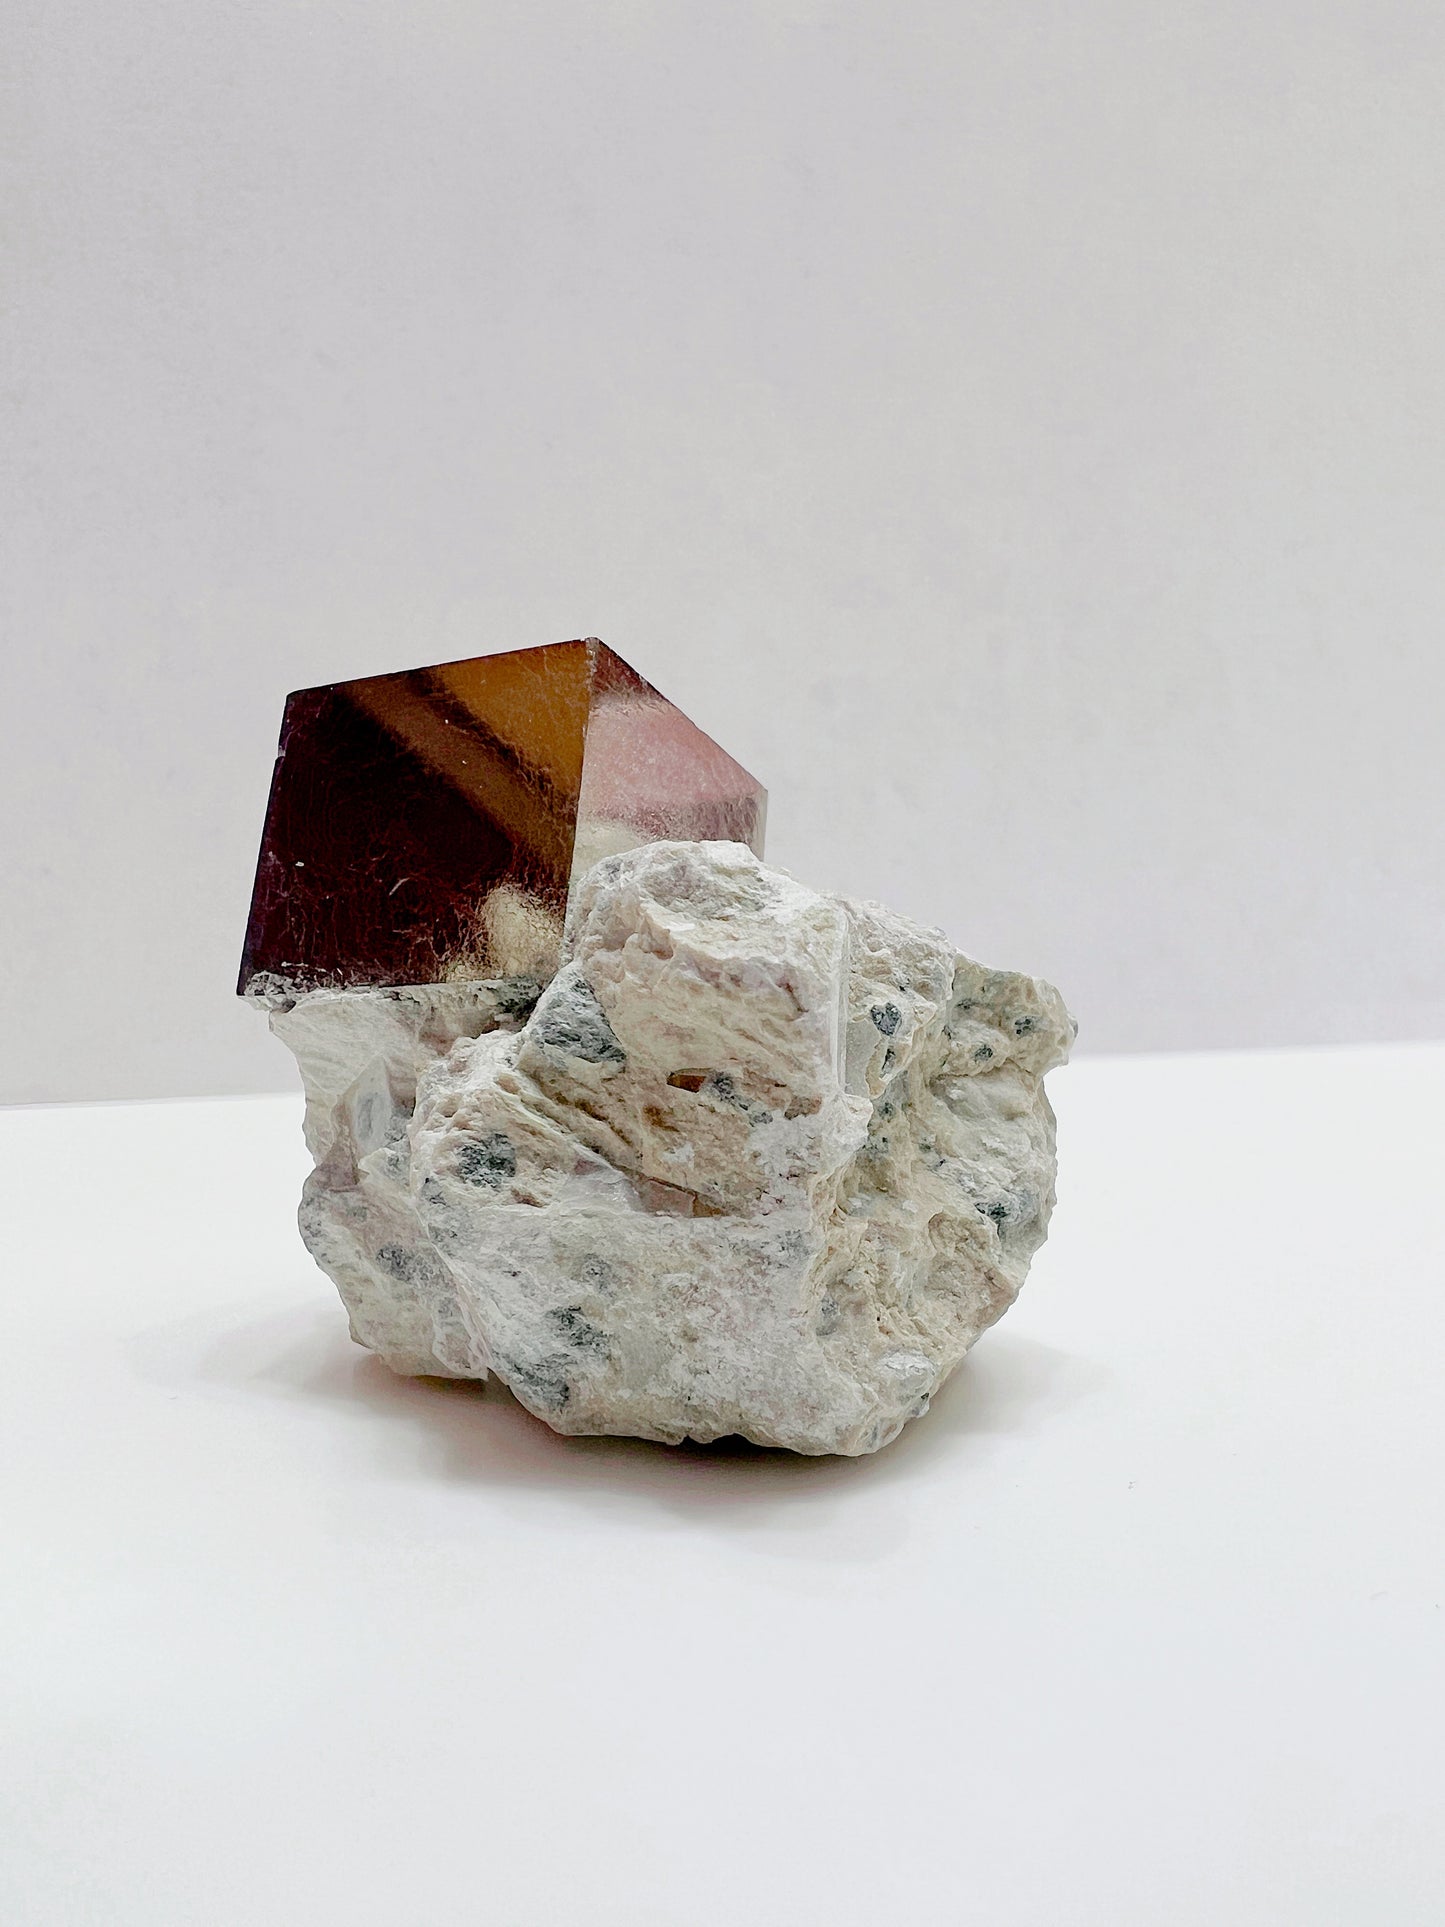 [Crystal] Pyrite on Matrix (Cubic Crystal) Spain